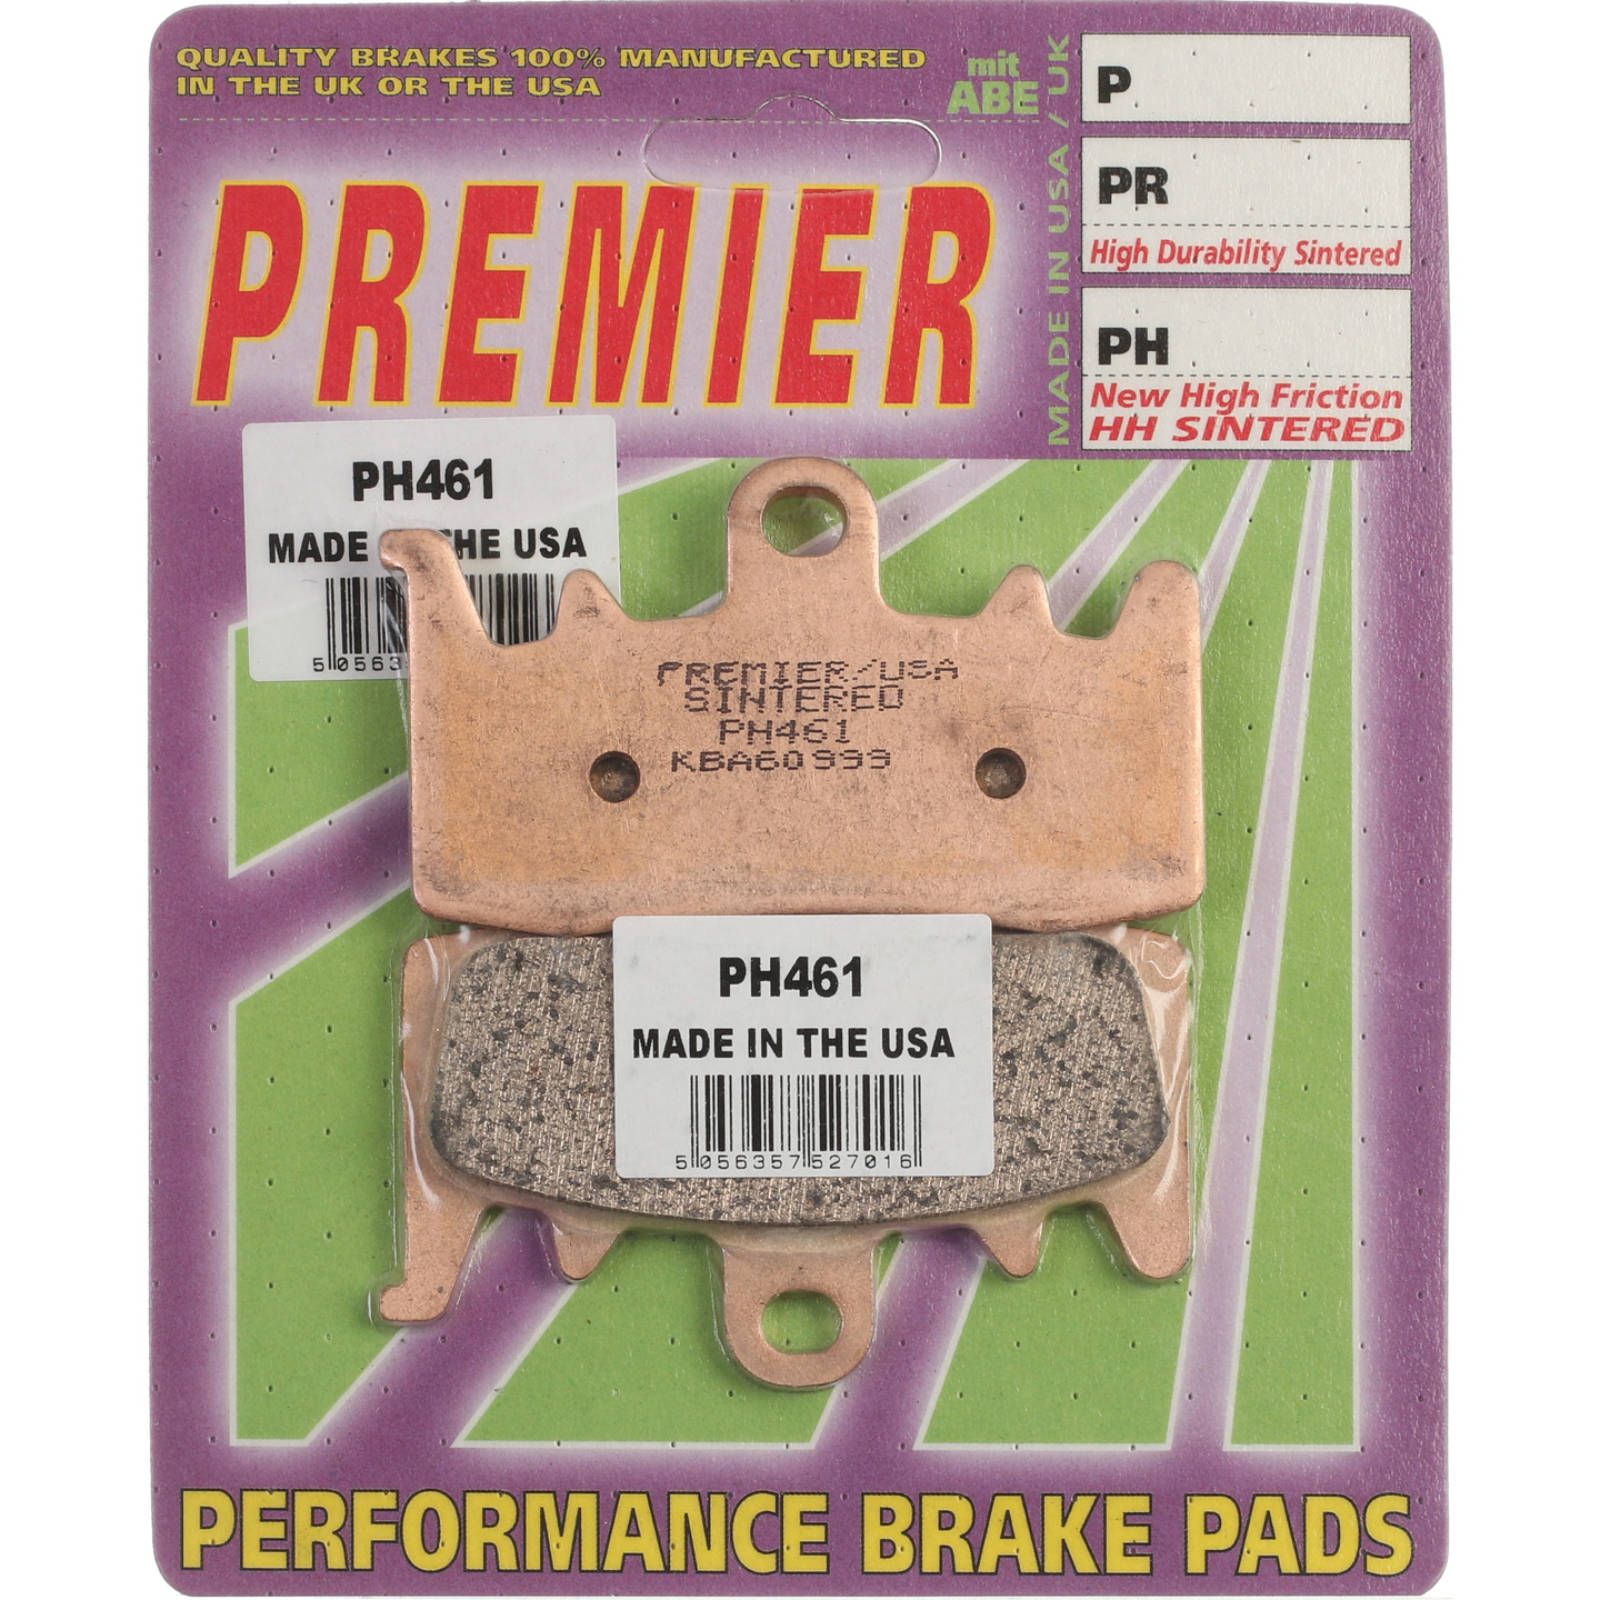 New PREMIER Brake Pad - PH Street Sintered (GF328S3) #PBPH461